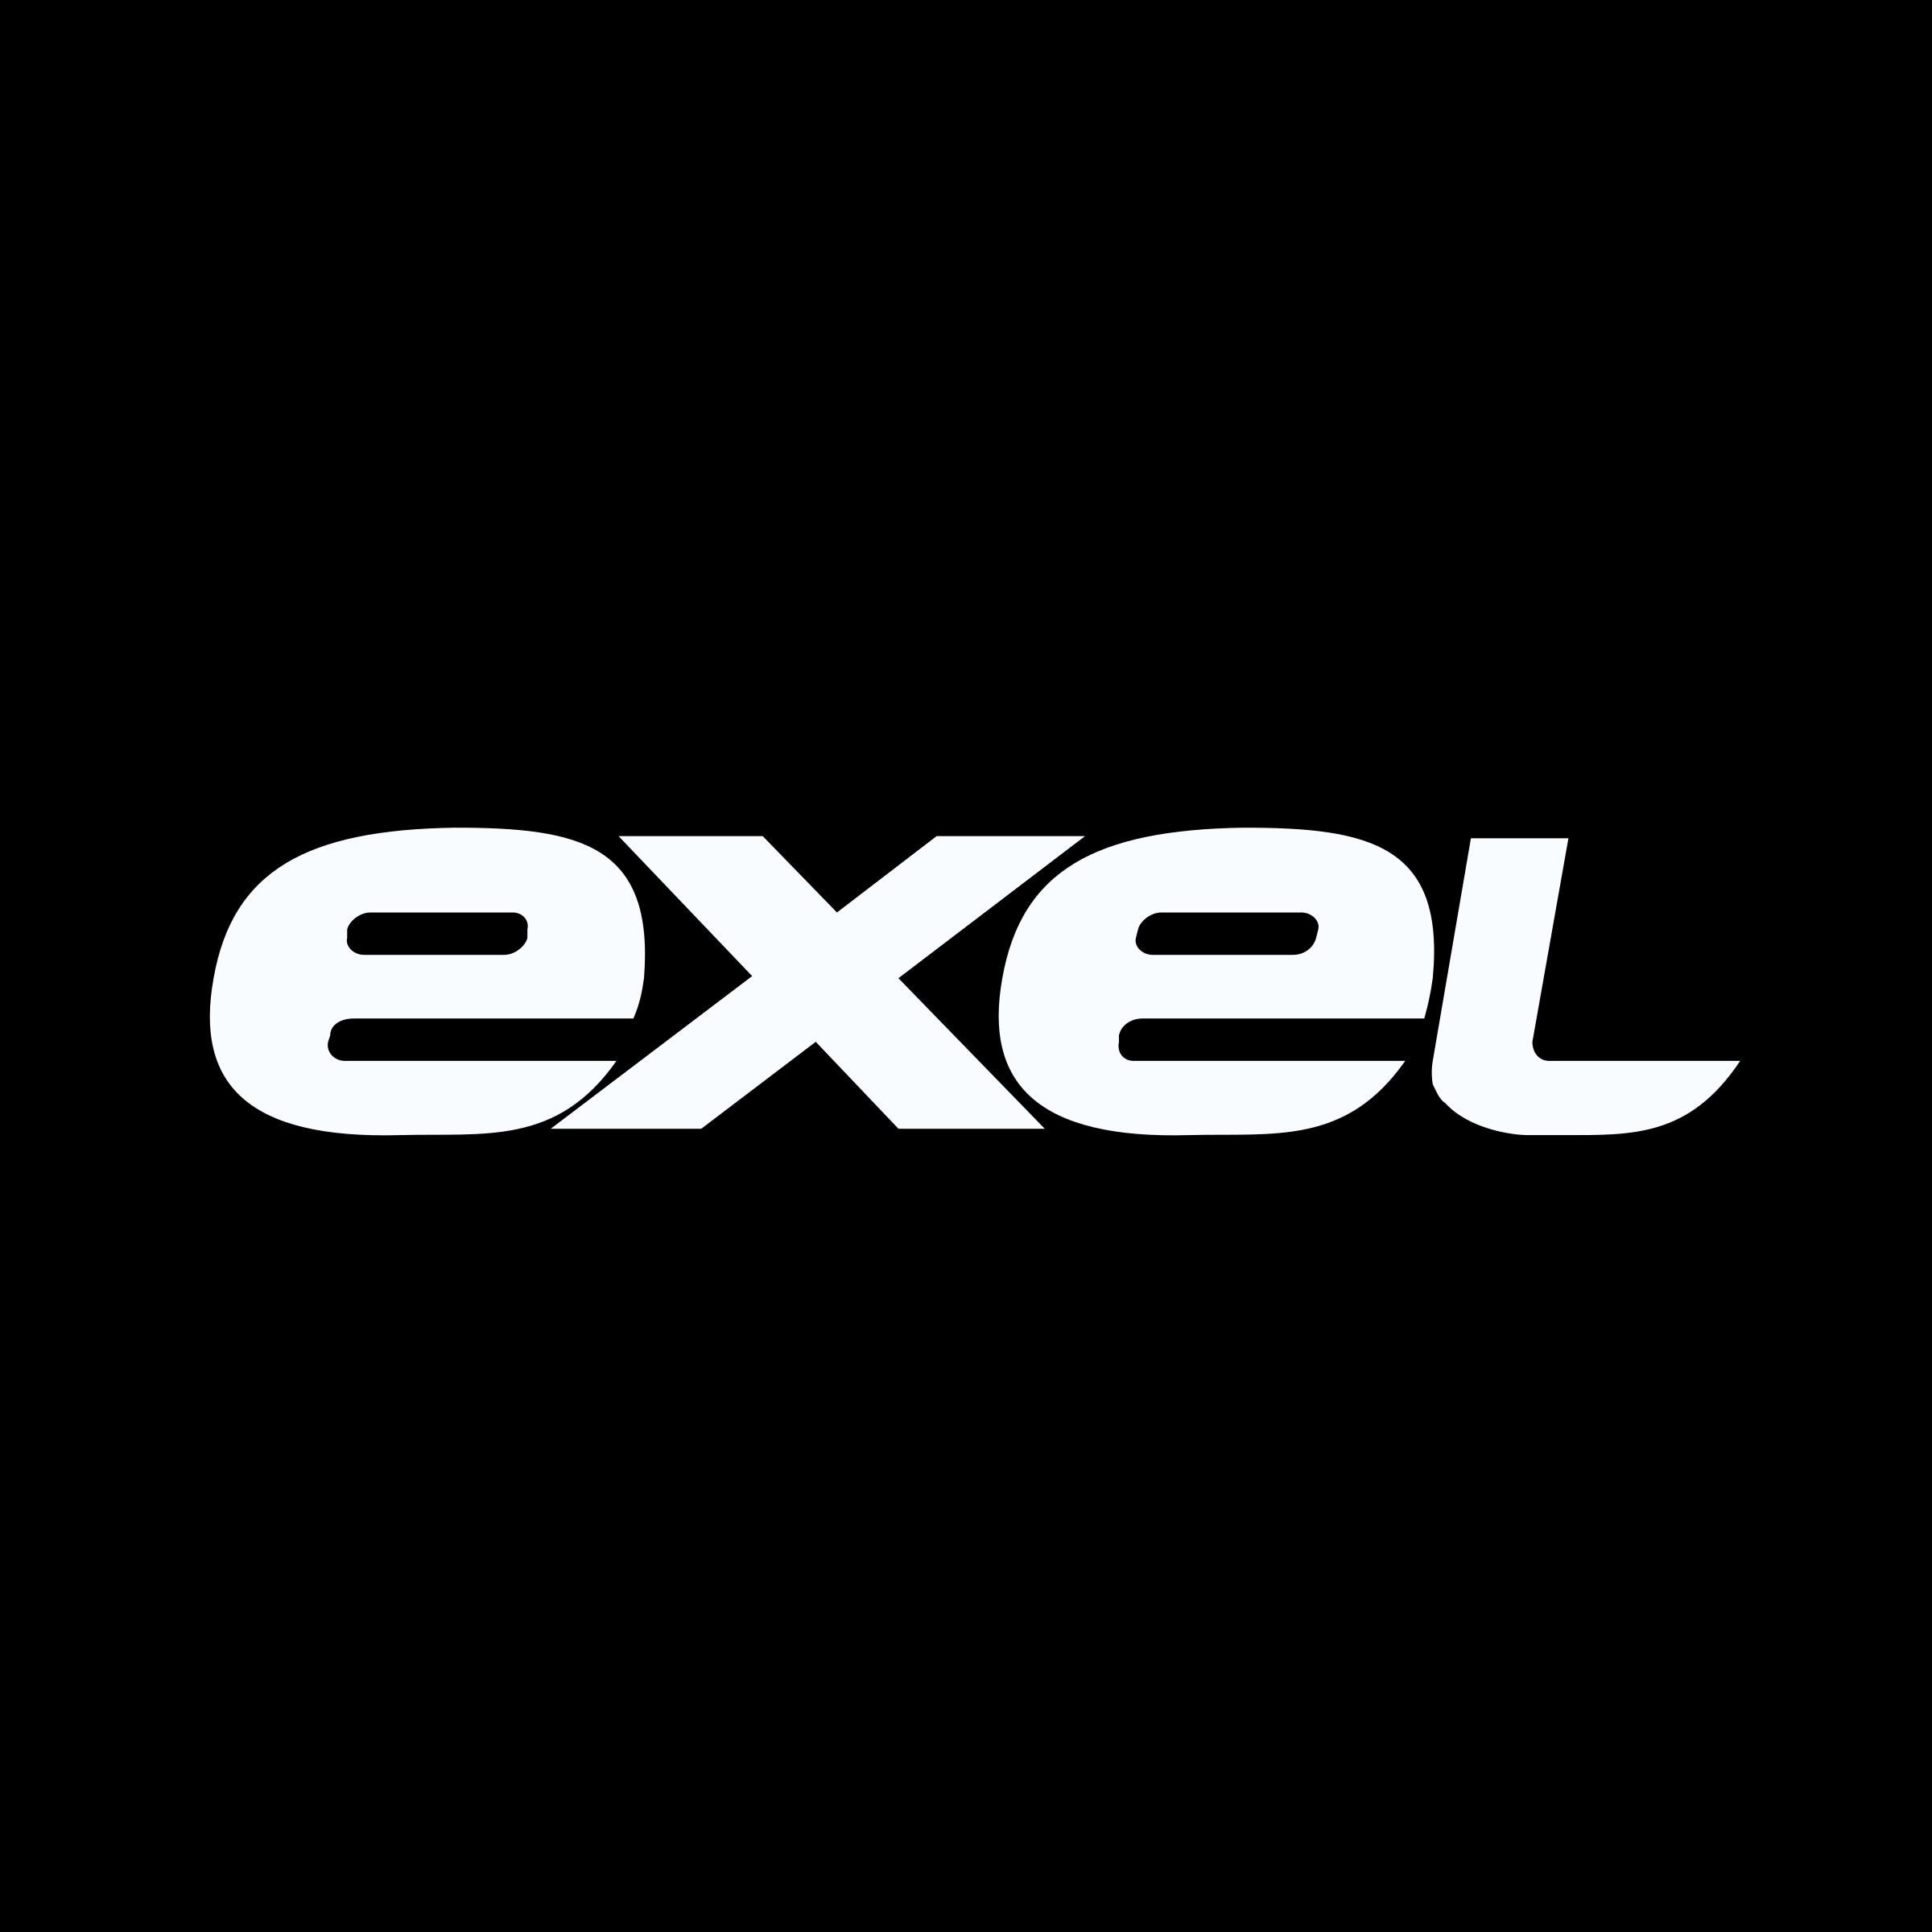 Exel Logo - Exel Logo PNG Transparent & SVG Vector